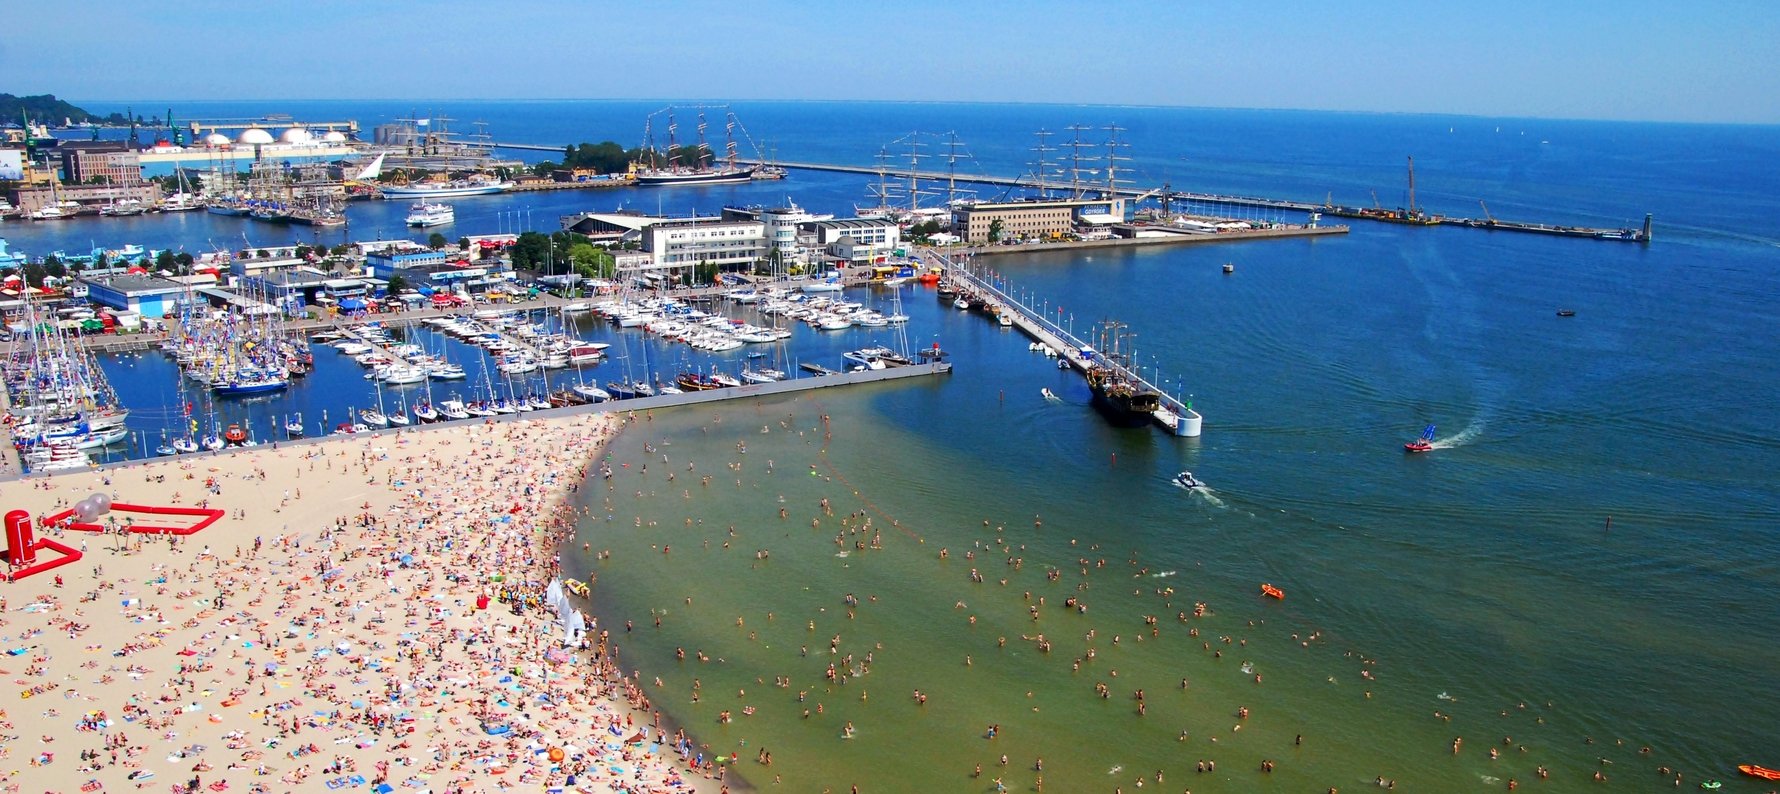 Gdynia Summer Aerial View. Photo by Krzysztof Romański / Courtesy of Gdynia City Council  ​